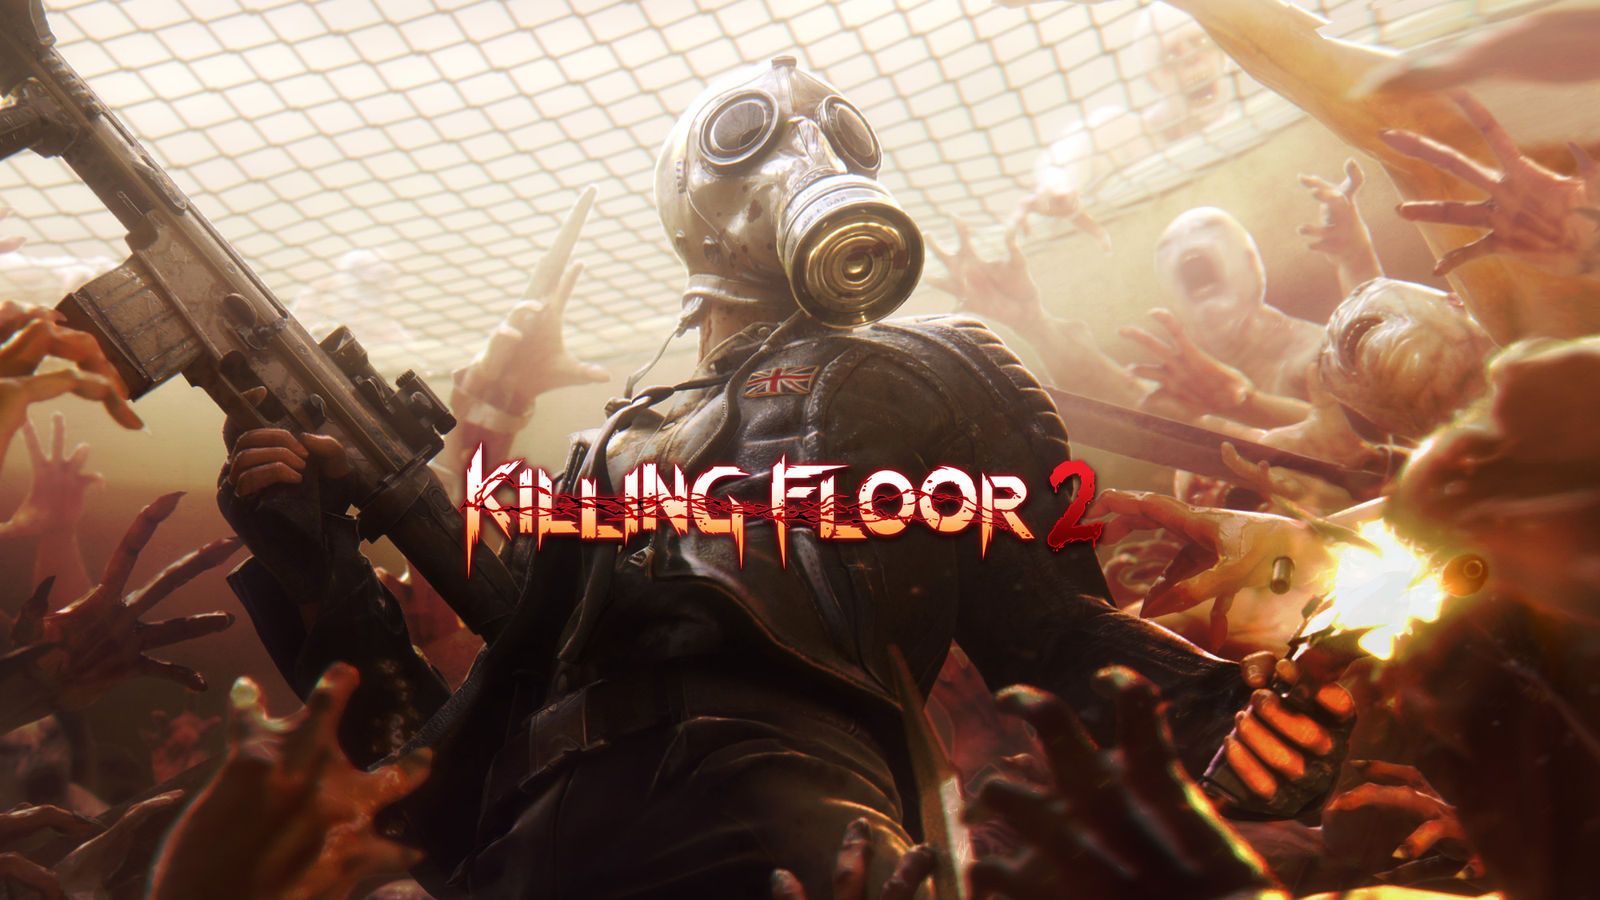 Killing Floor 2 Deluxe Edition (Steam) RU/CIS